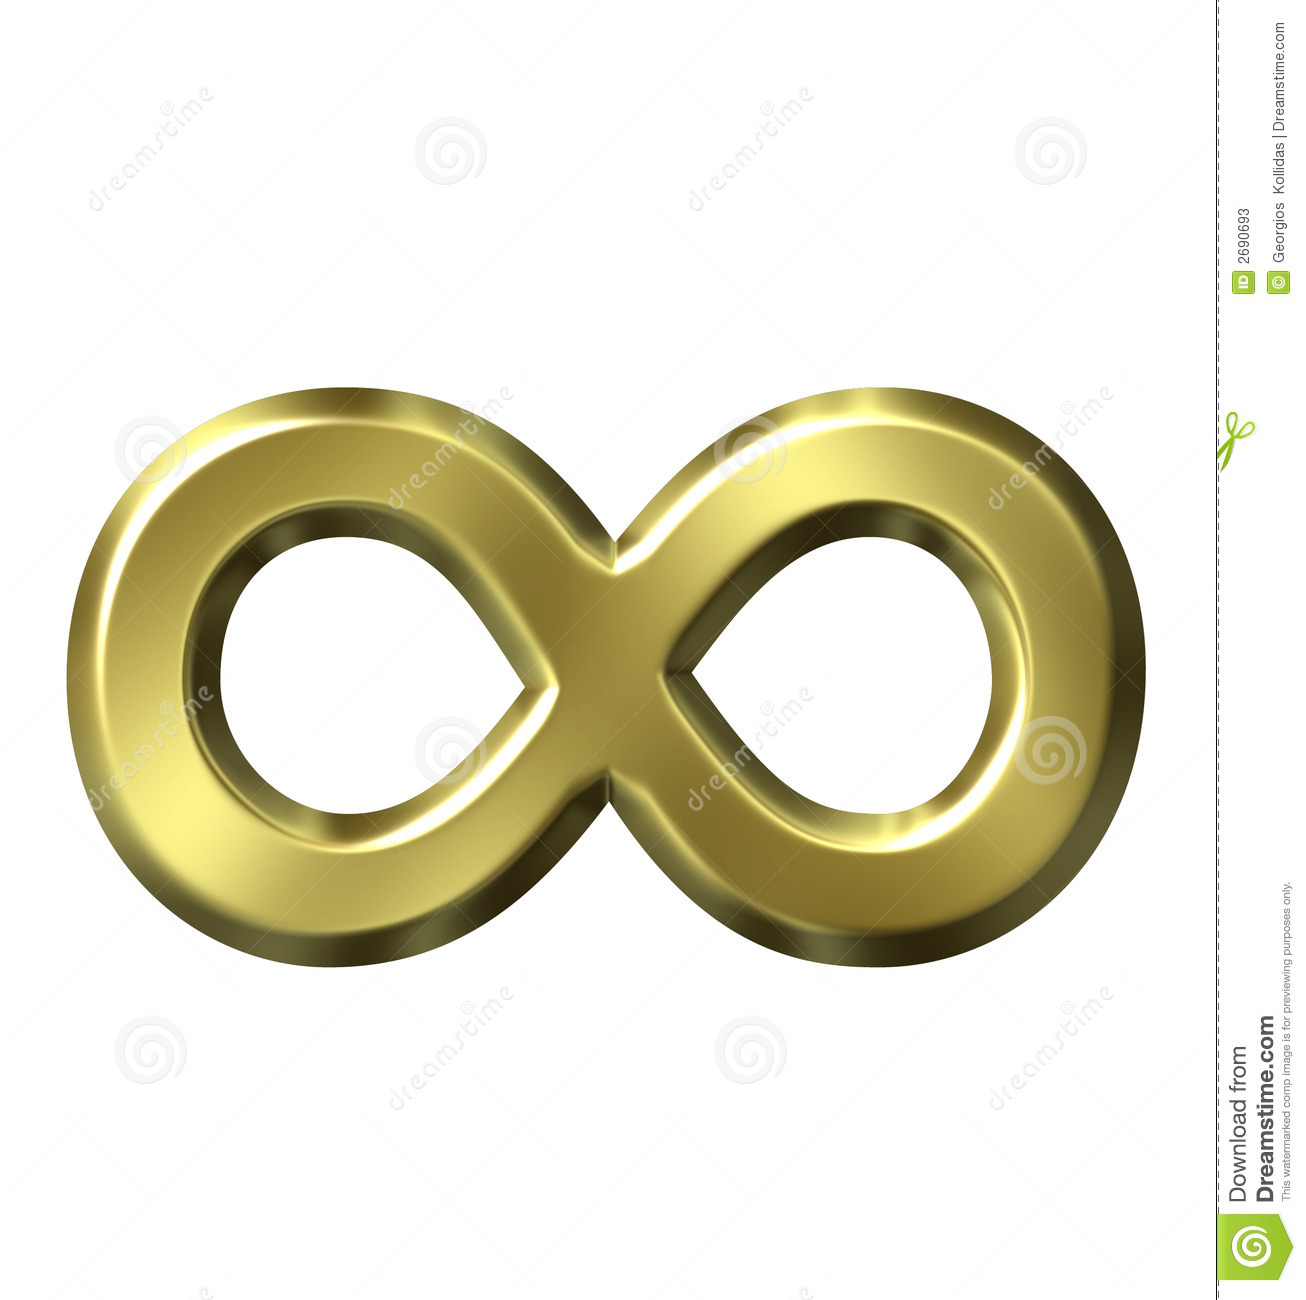 Infinity Symbol Stock Photos   Image  2690693